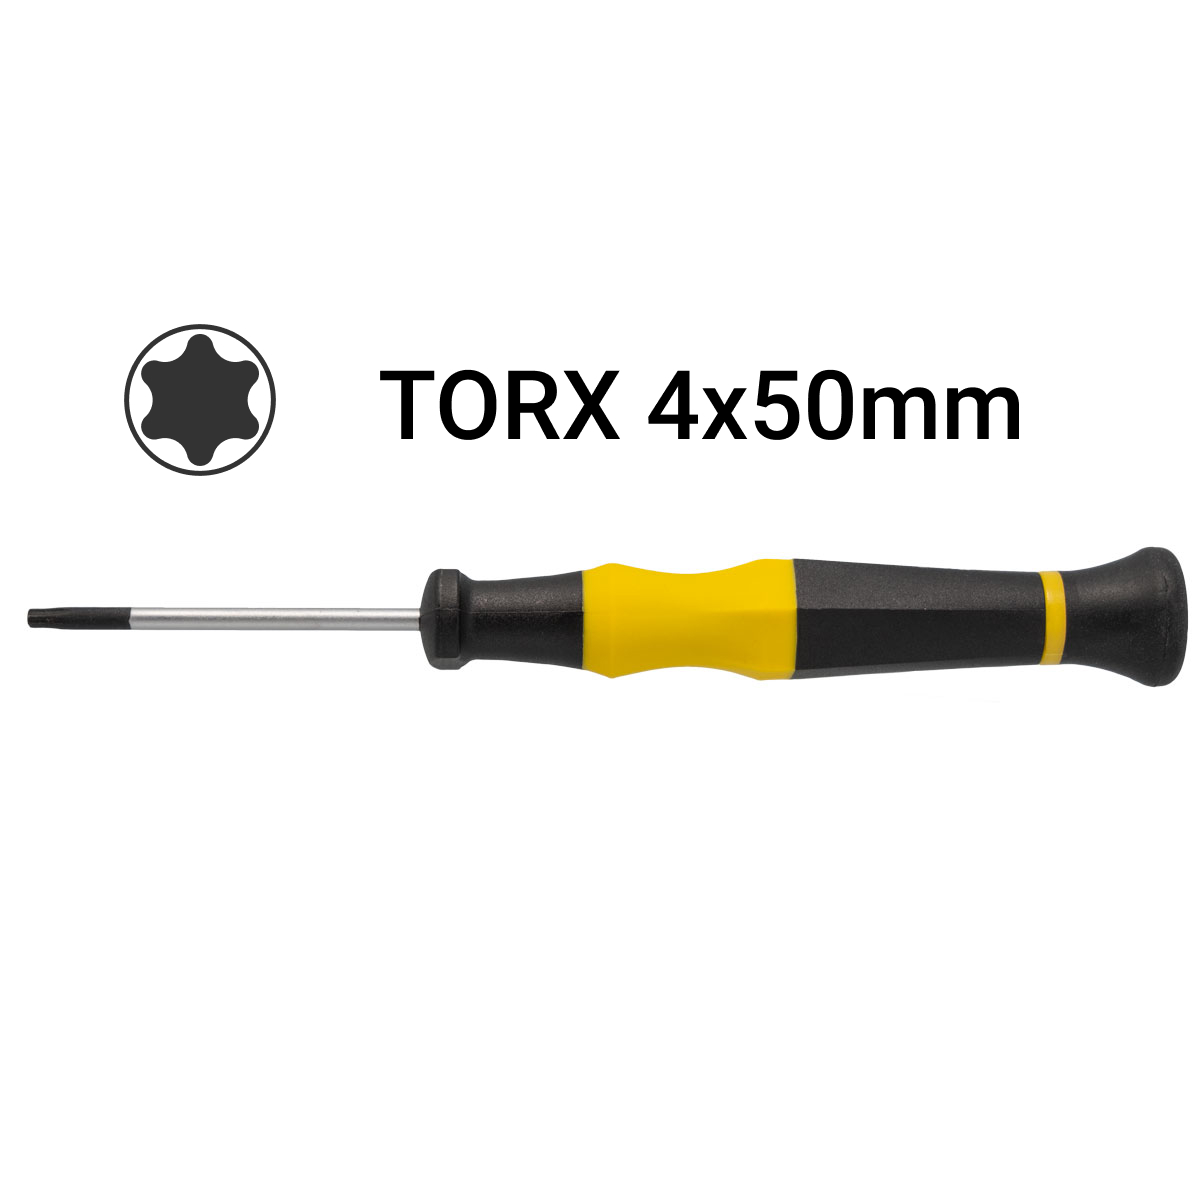 T4x50mm Torx Precision Screwdriver